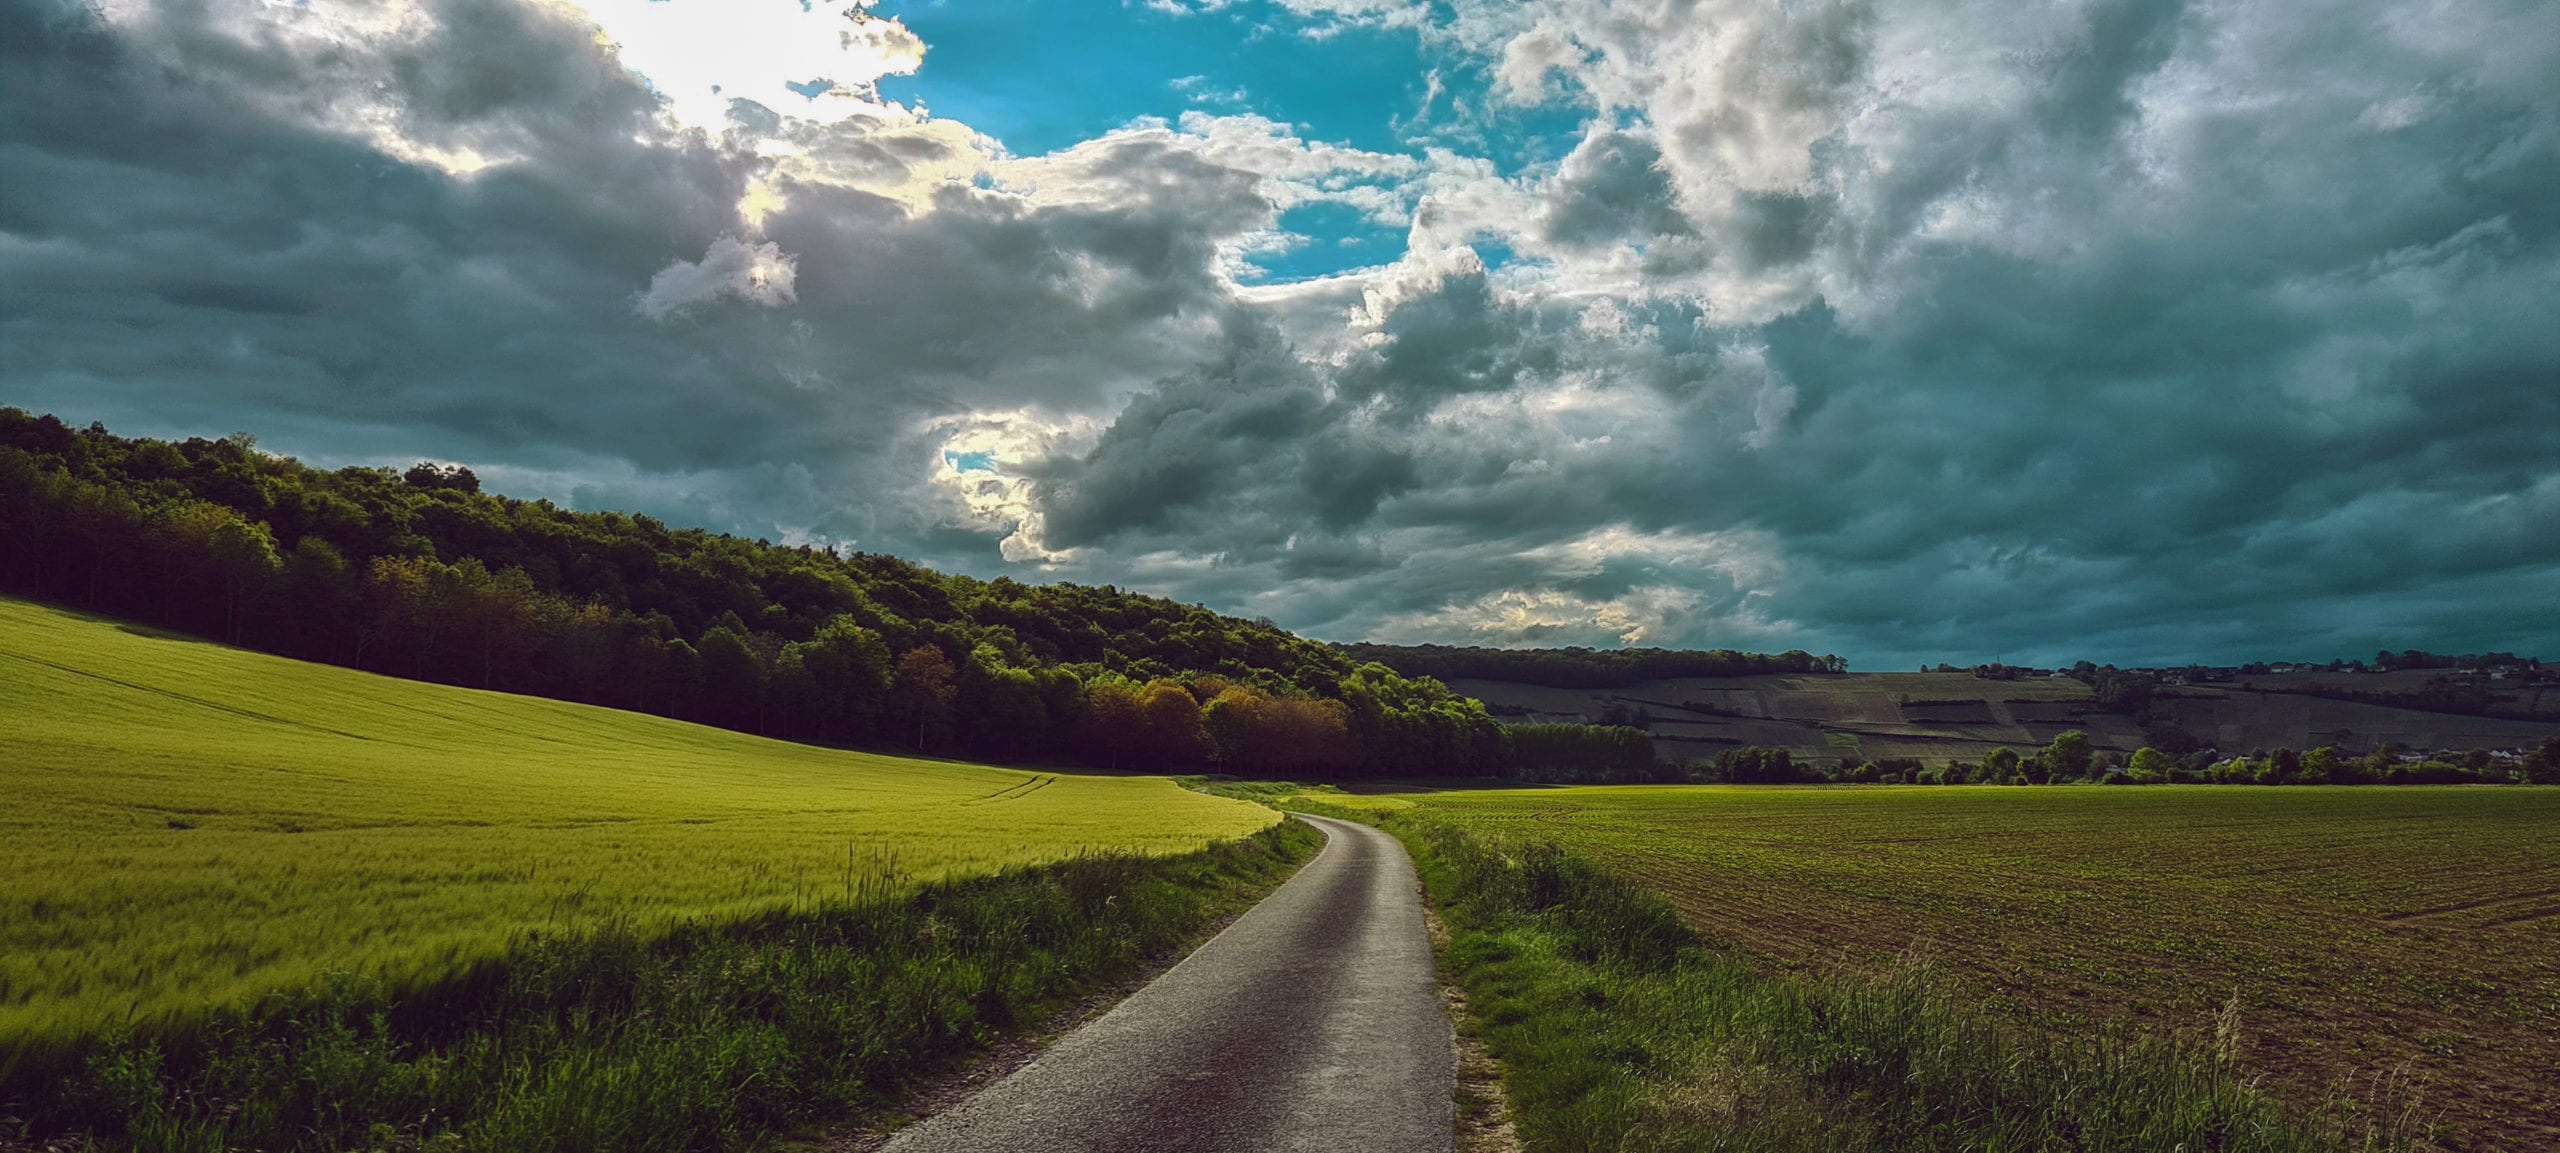 a narrow road through farming fields, trees and a cloudy blue sky